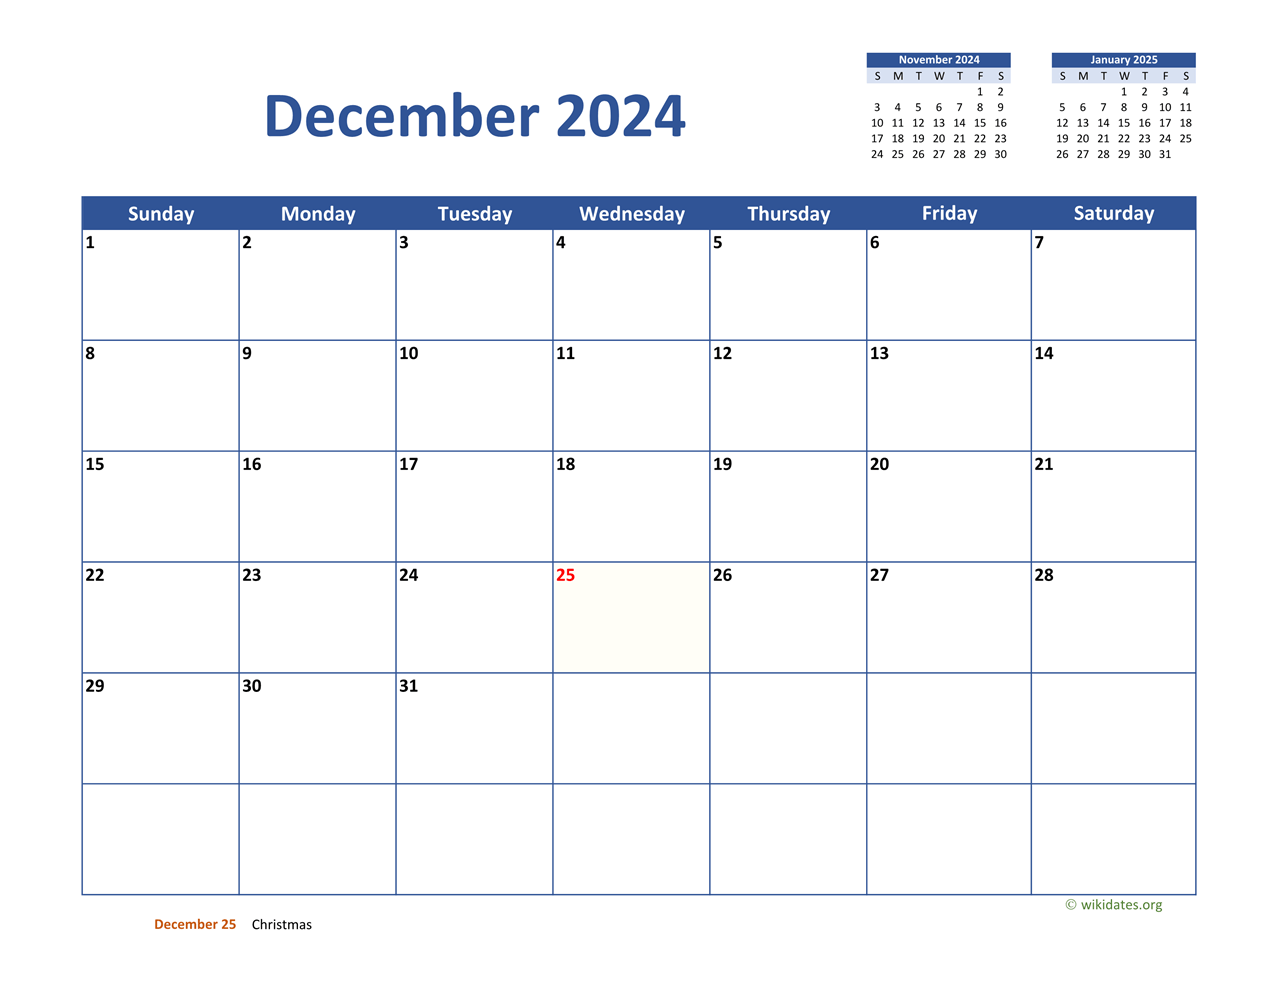 December 2024 Calendar Classic | WikiDates.org